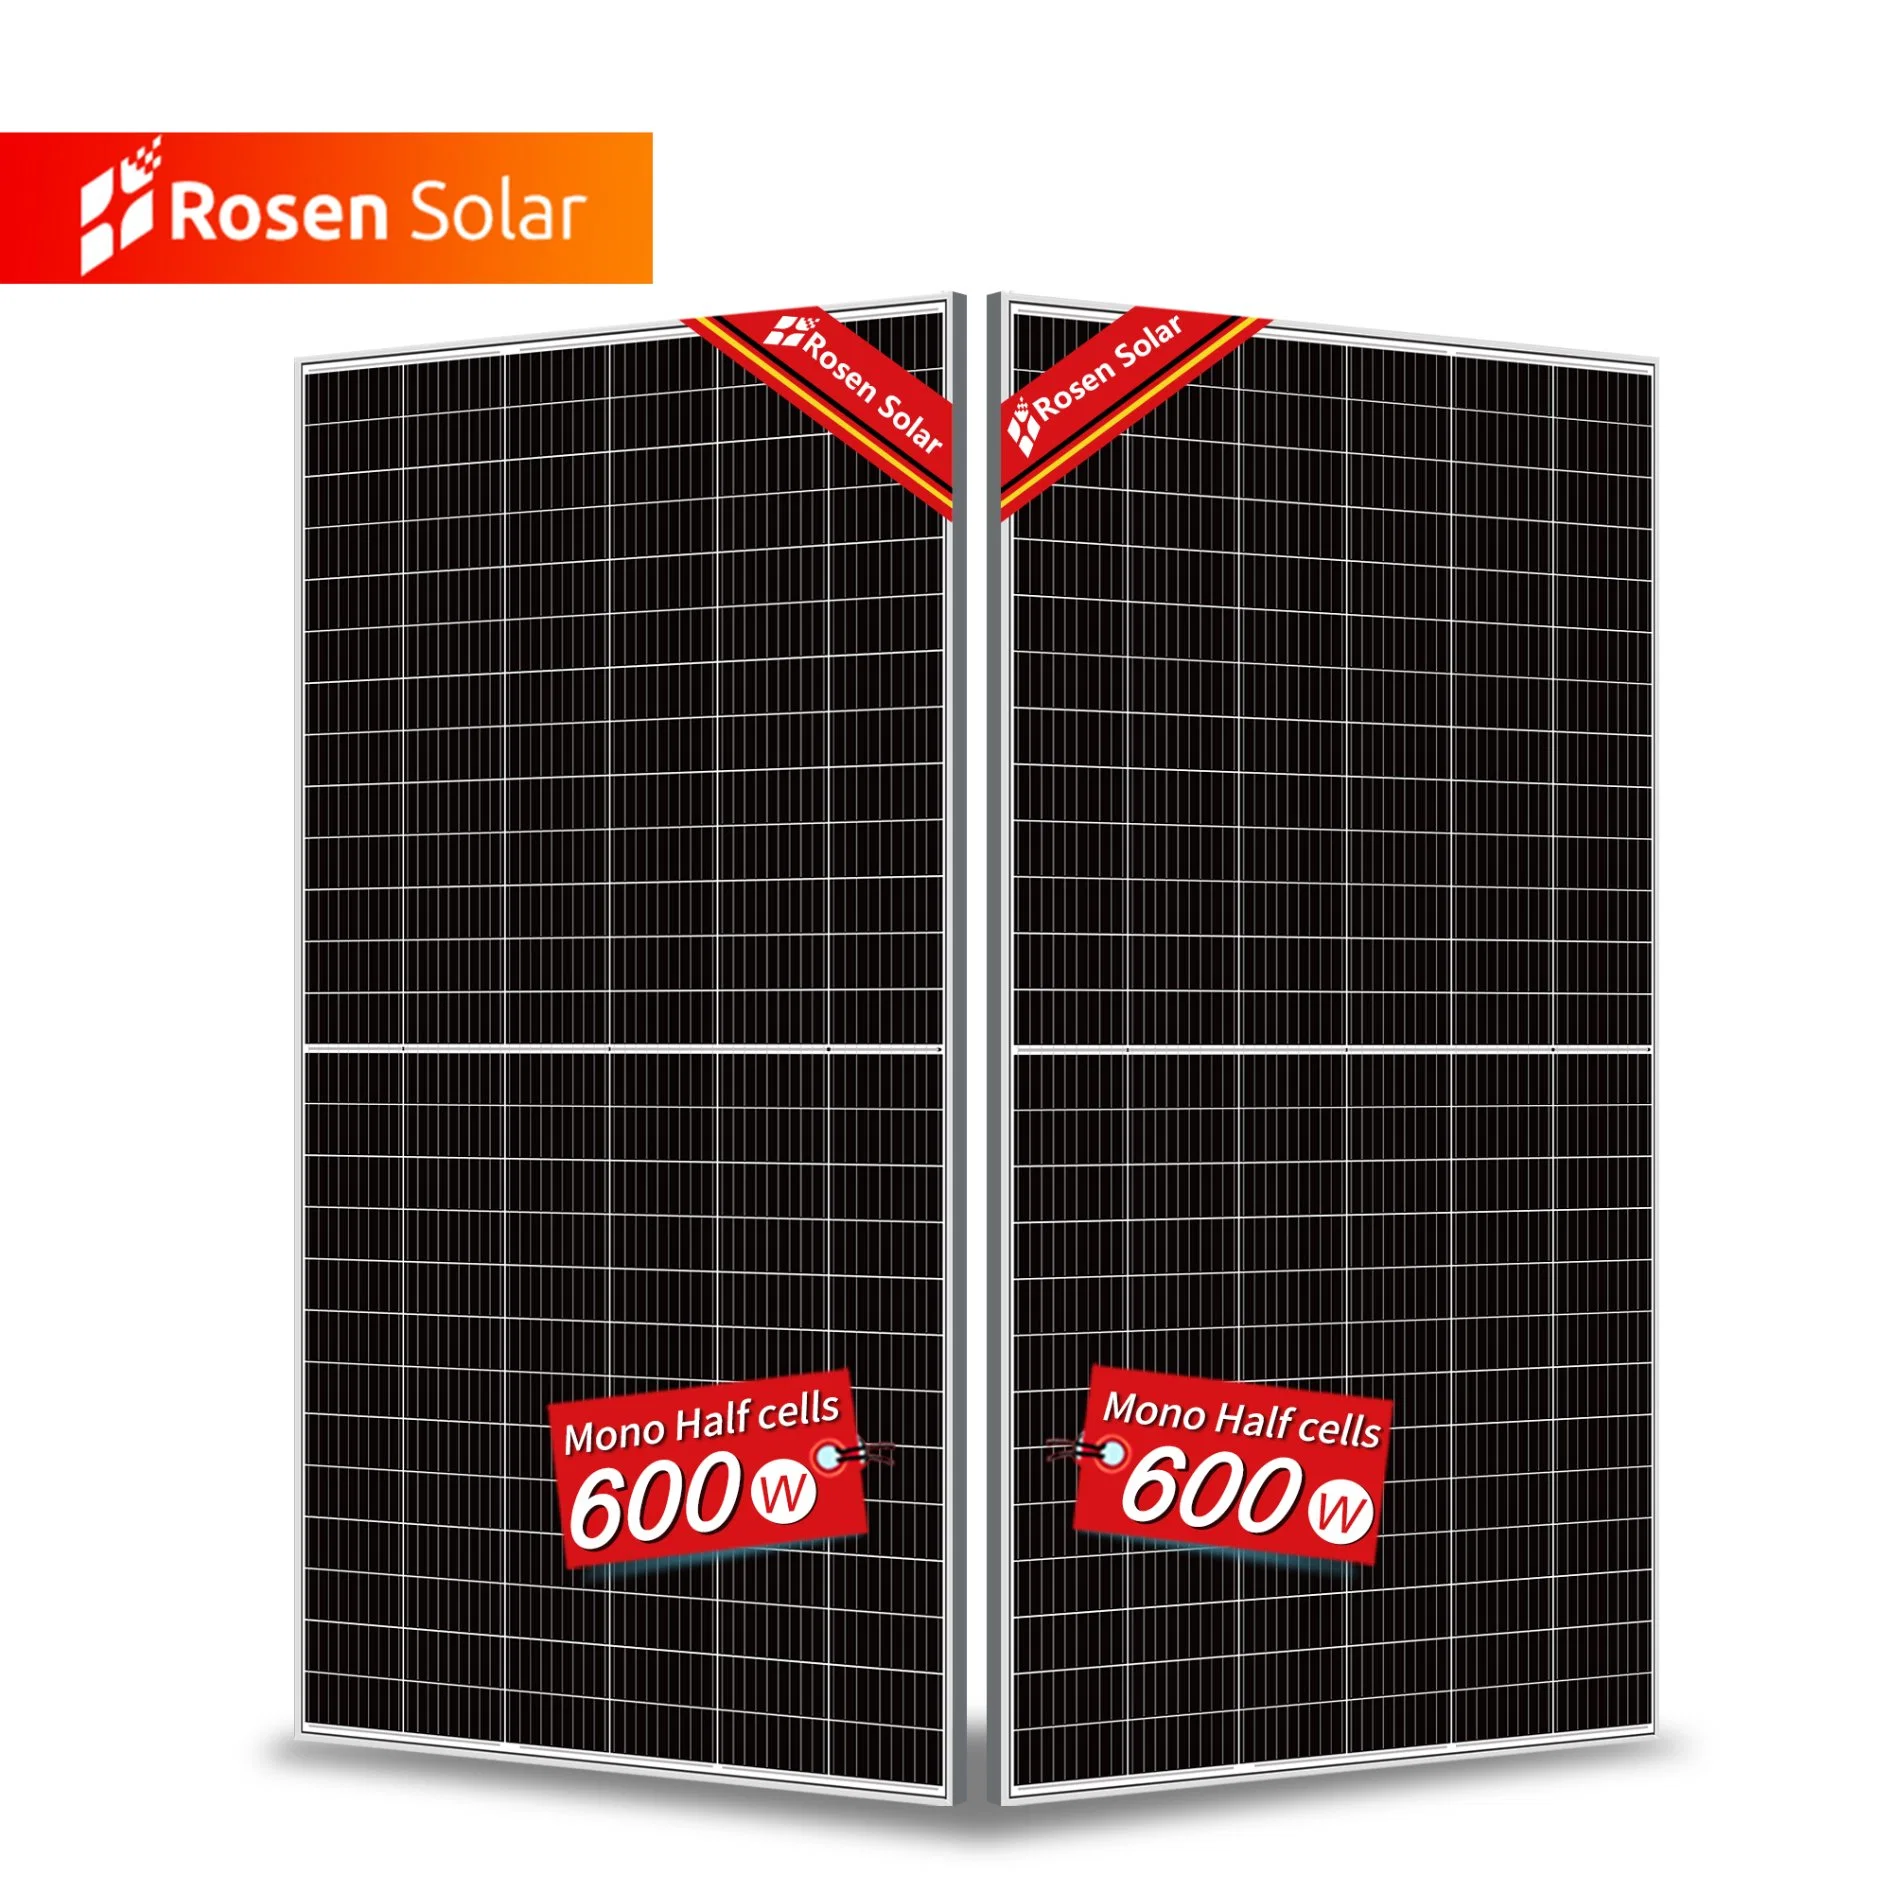 Rosen High Power Jinko Trina Ja Canadian A Grade Solar Cell Panel 450W 500W 600W Mono PV Energy Module Products